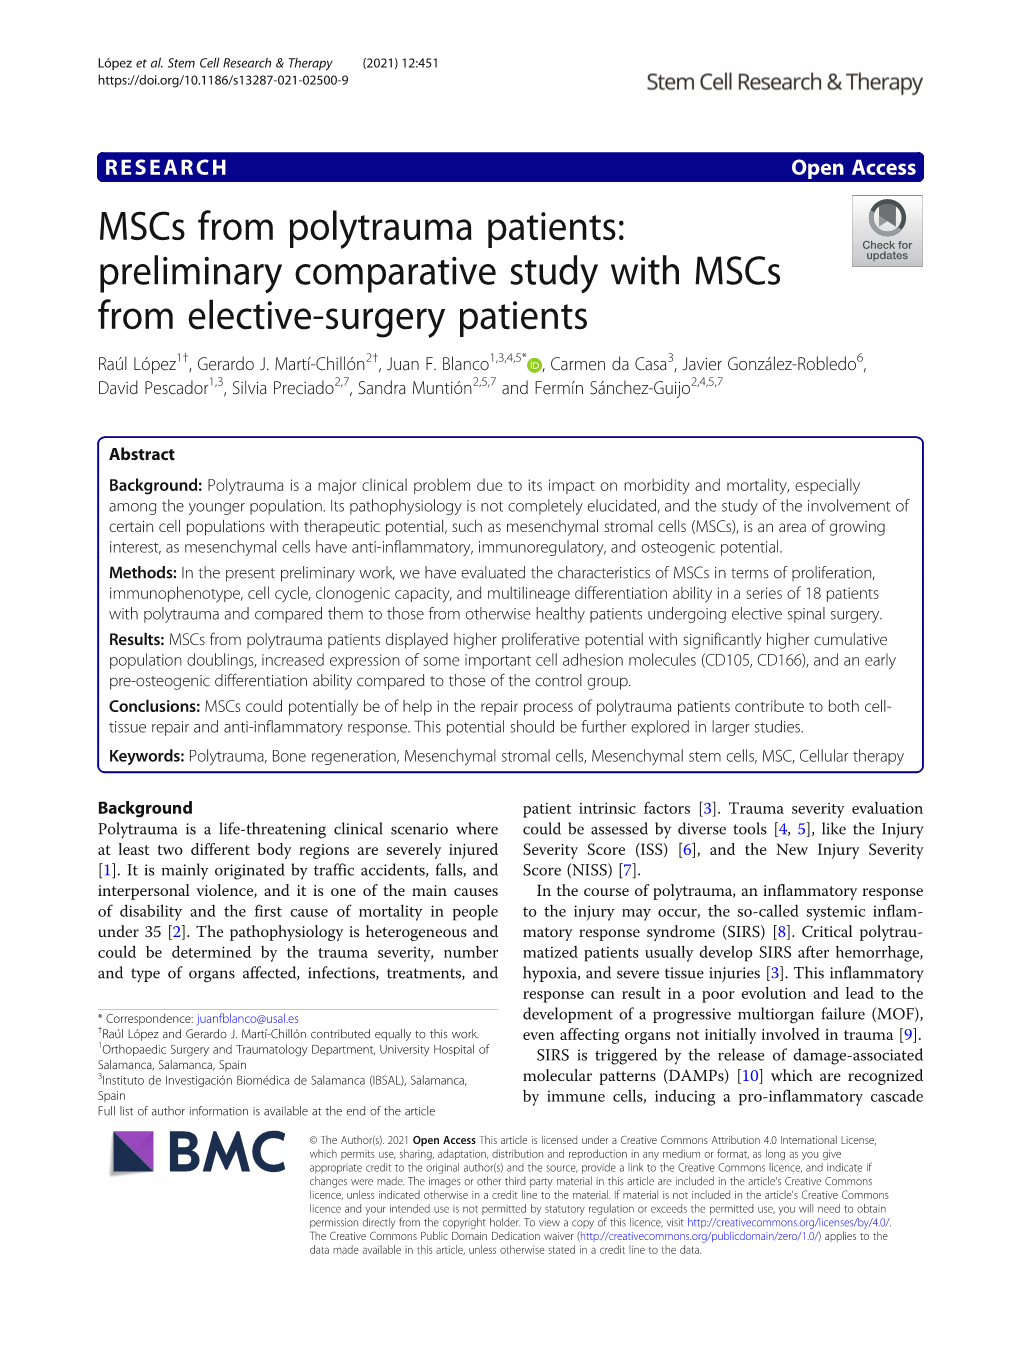 Mscs from Polytrauma Patients: Preliminary Comparative Study with Mscs from Elective-Surgery Patients Raúl López1†, Gerardo J